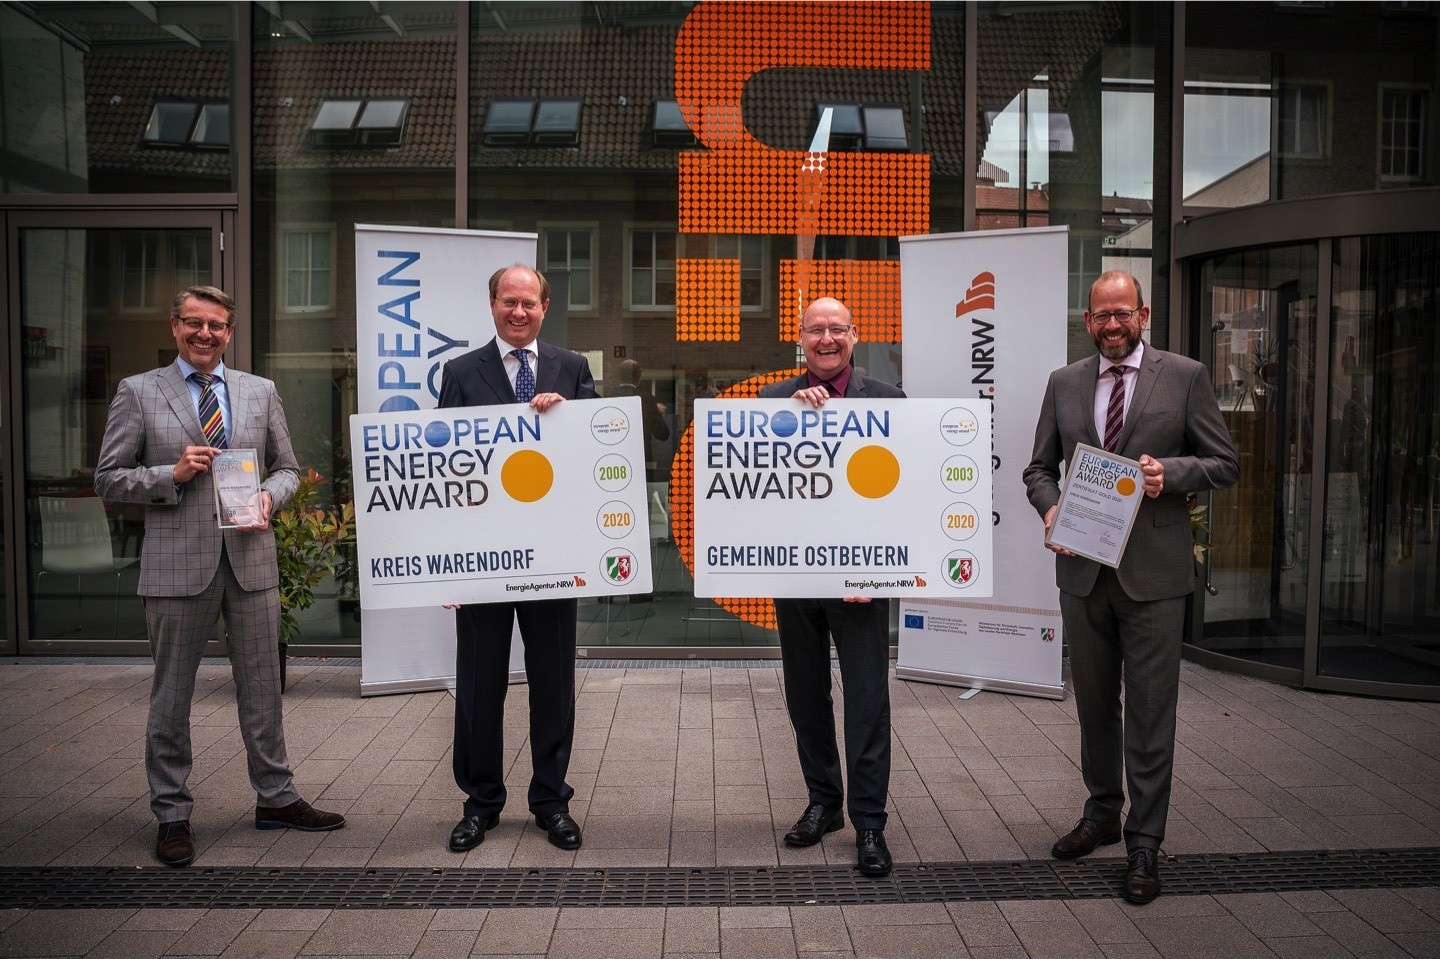 Kreis Warendorf,Klimaschutz,Gold,European Energy Award,Dr. Olaf Gericke,Warendorf,Abfallwirtschaftsgesellschaft,